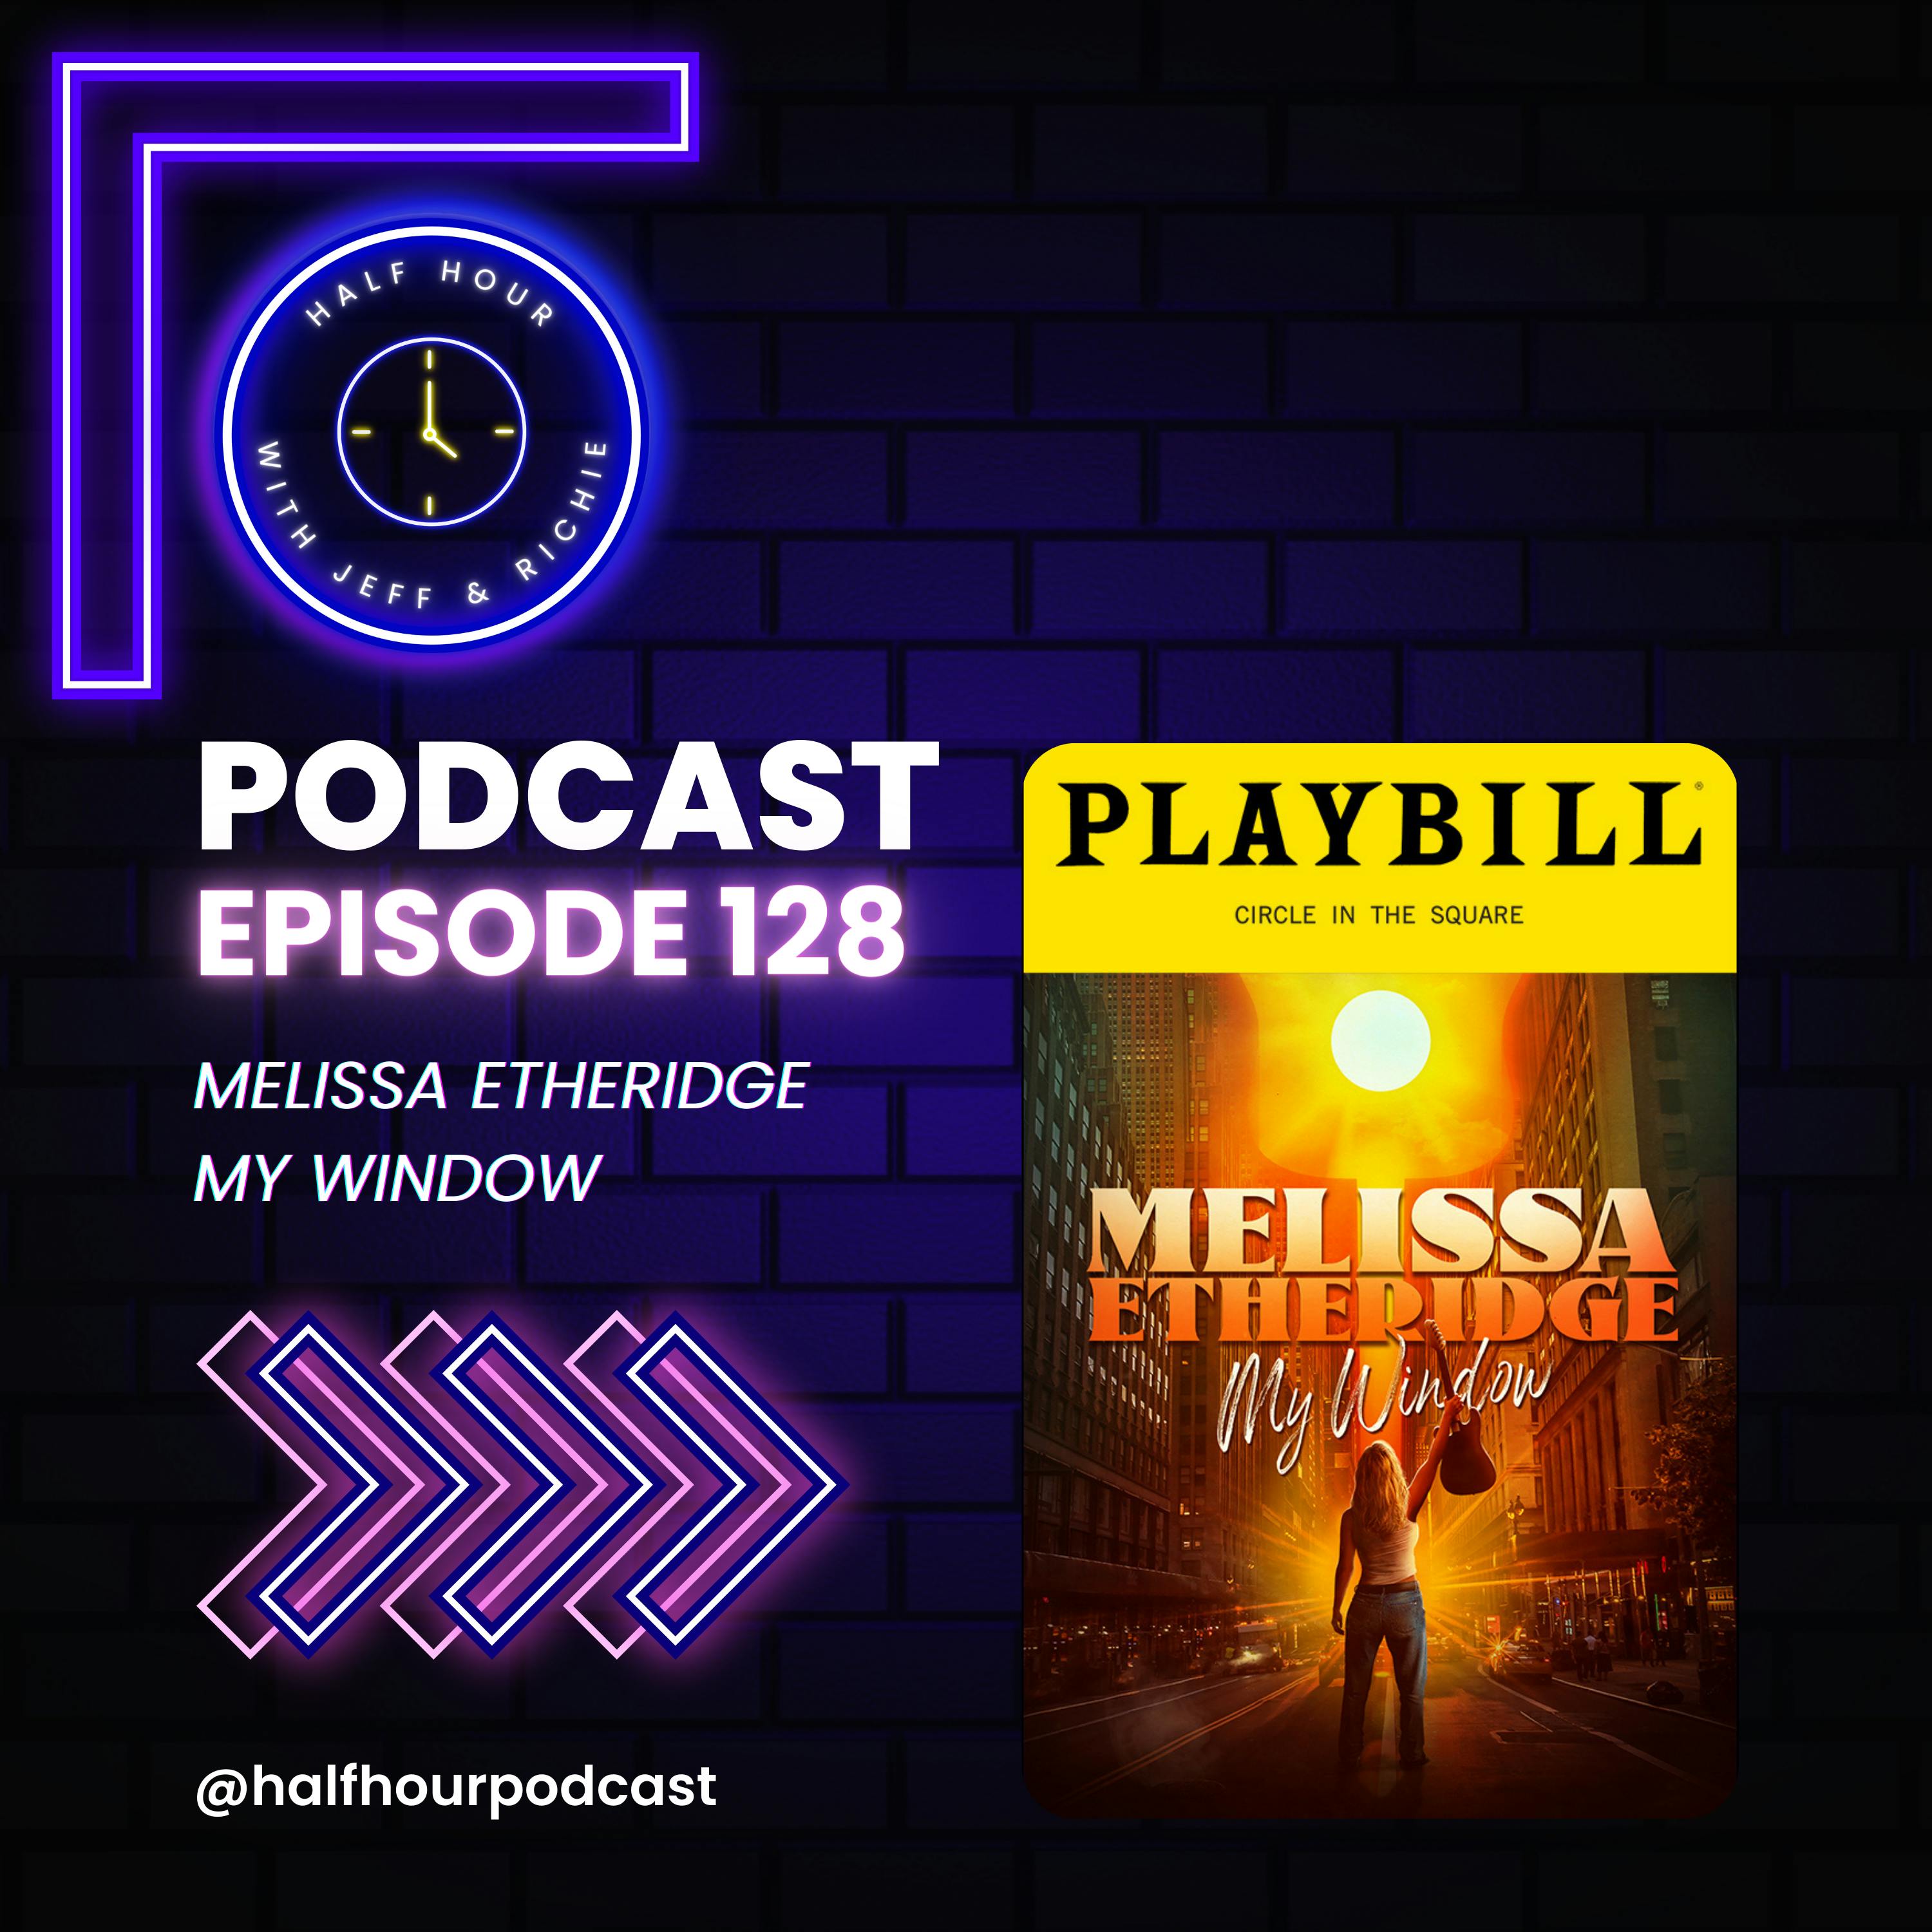 MELISSA ETHERIDGE MY WINDOW - A Post-Show Broadway Analysis